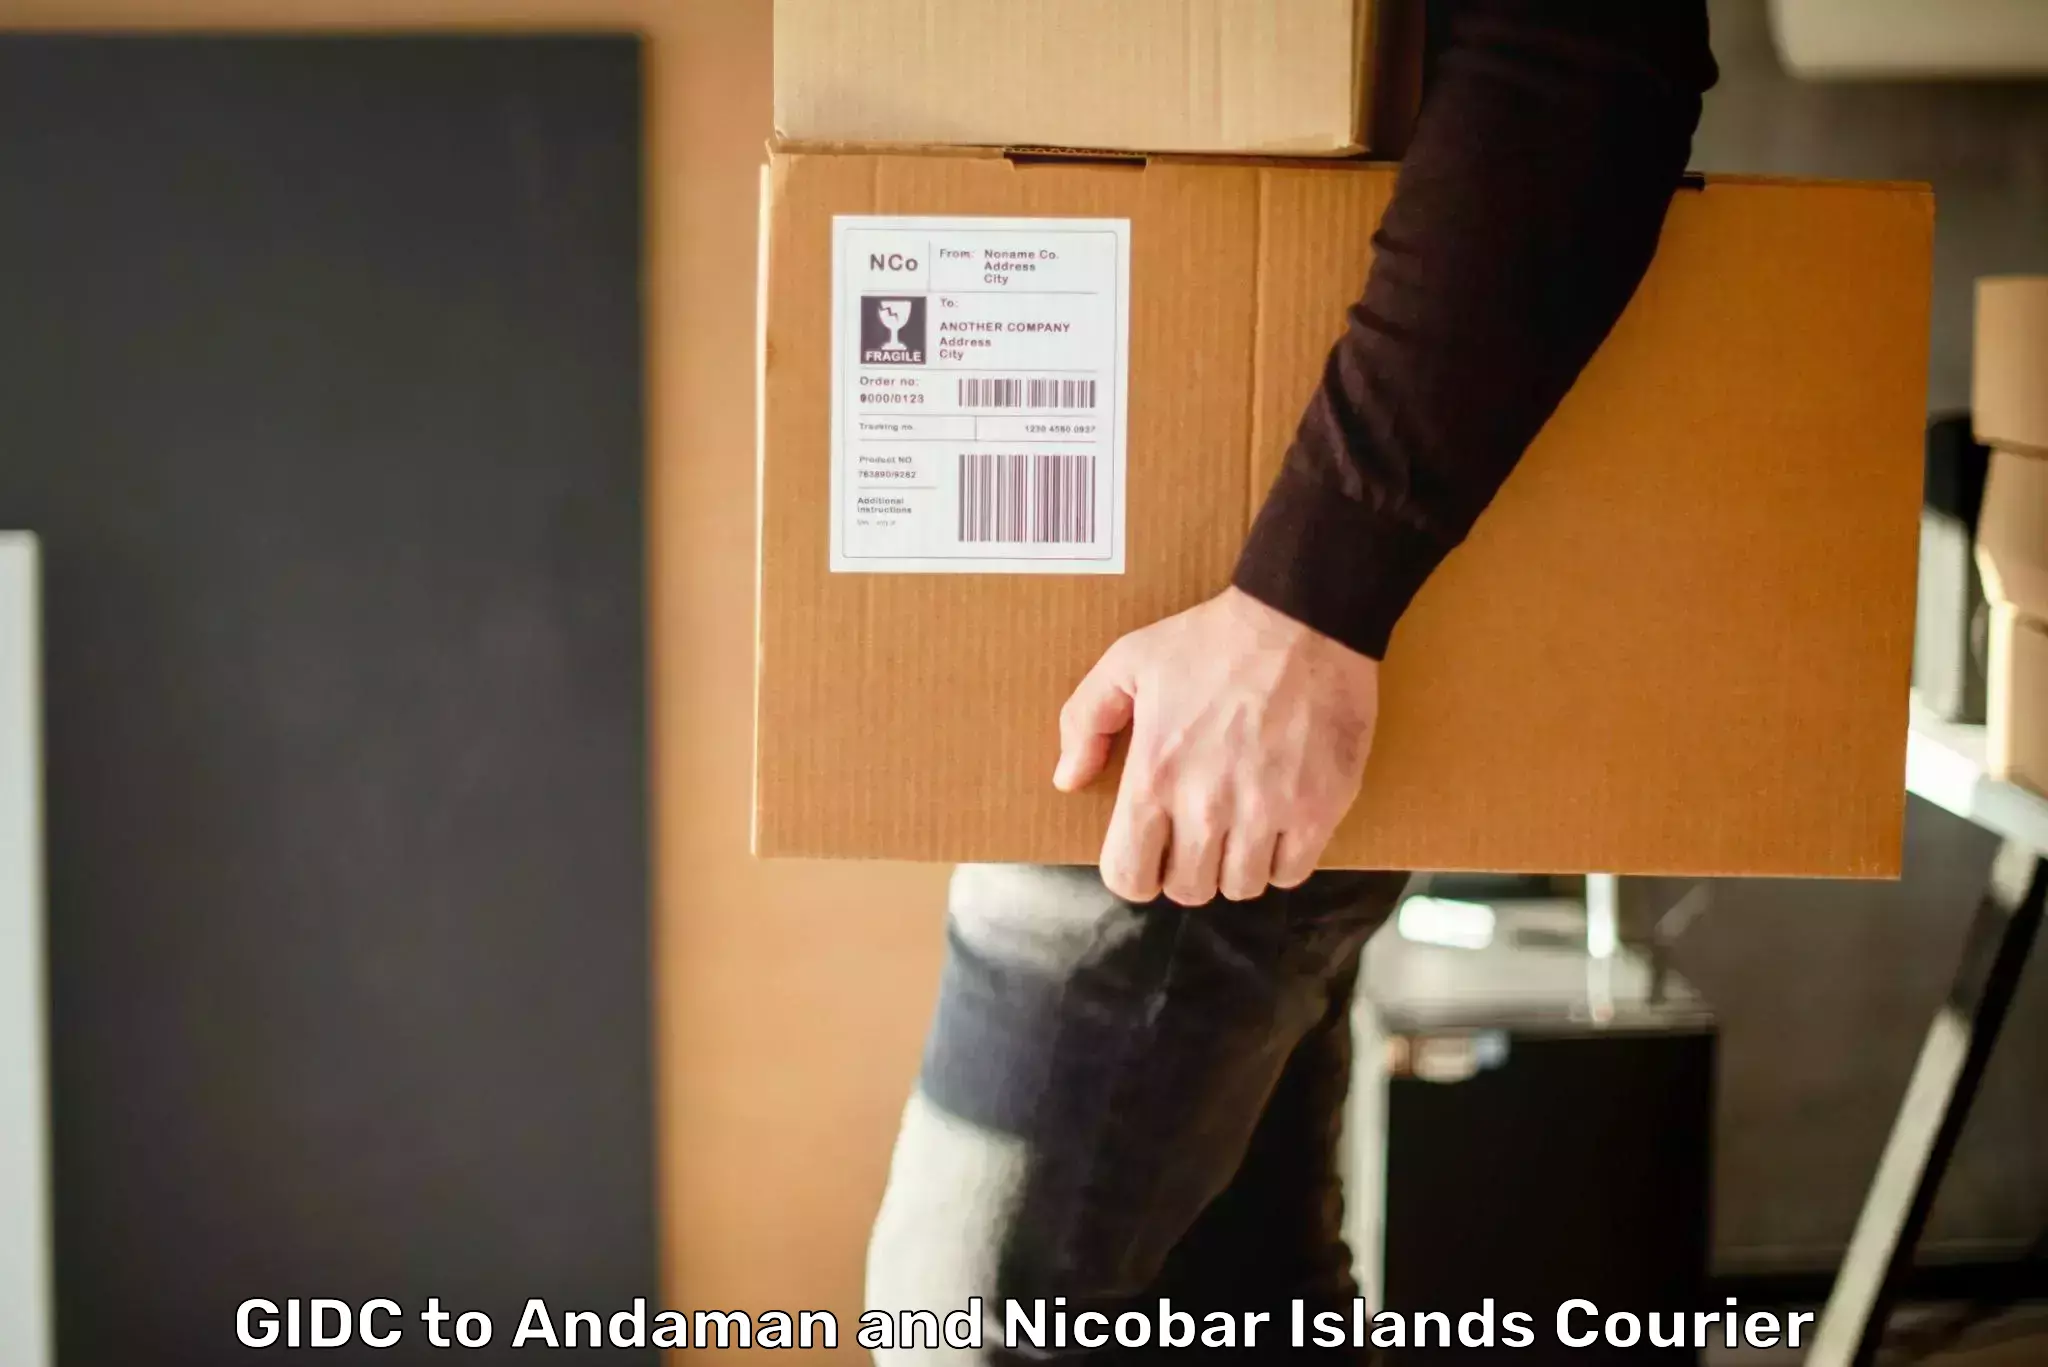 International parcel service GIDC to Andaman and Nicobar Islands